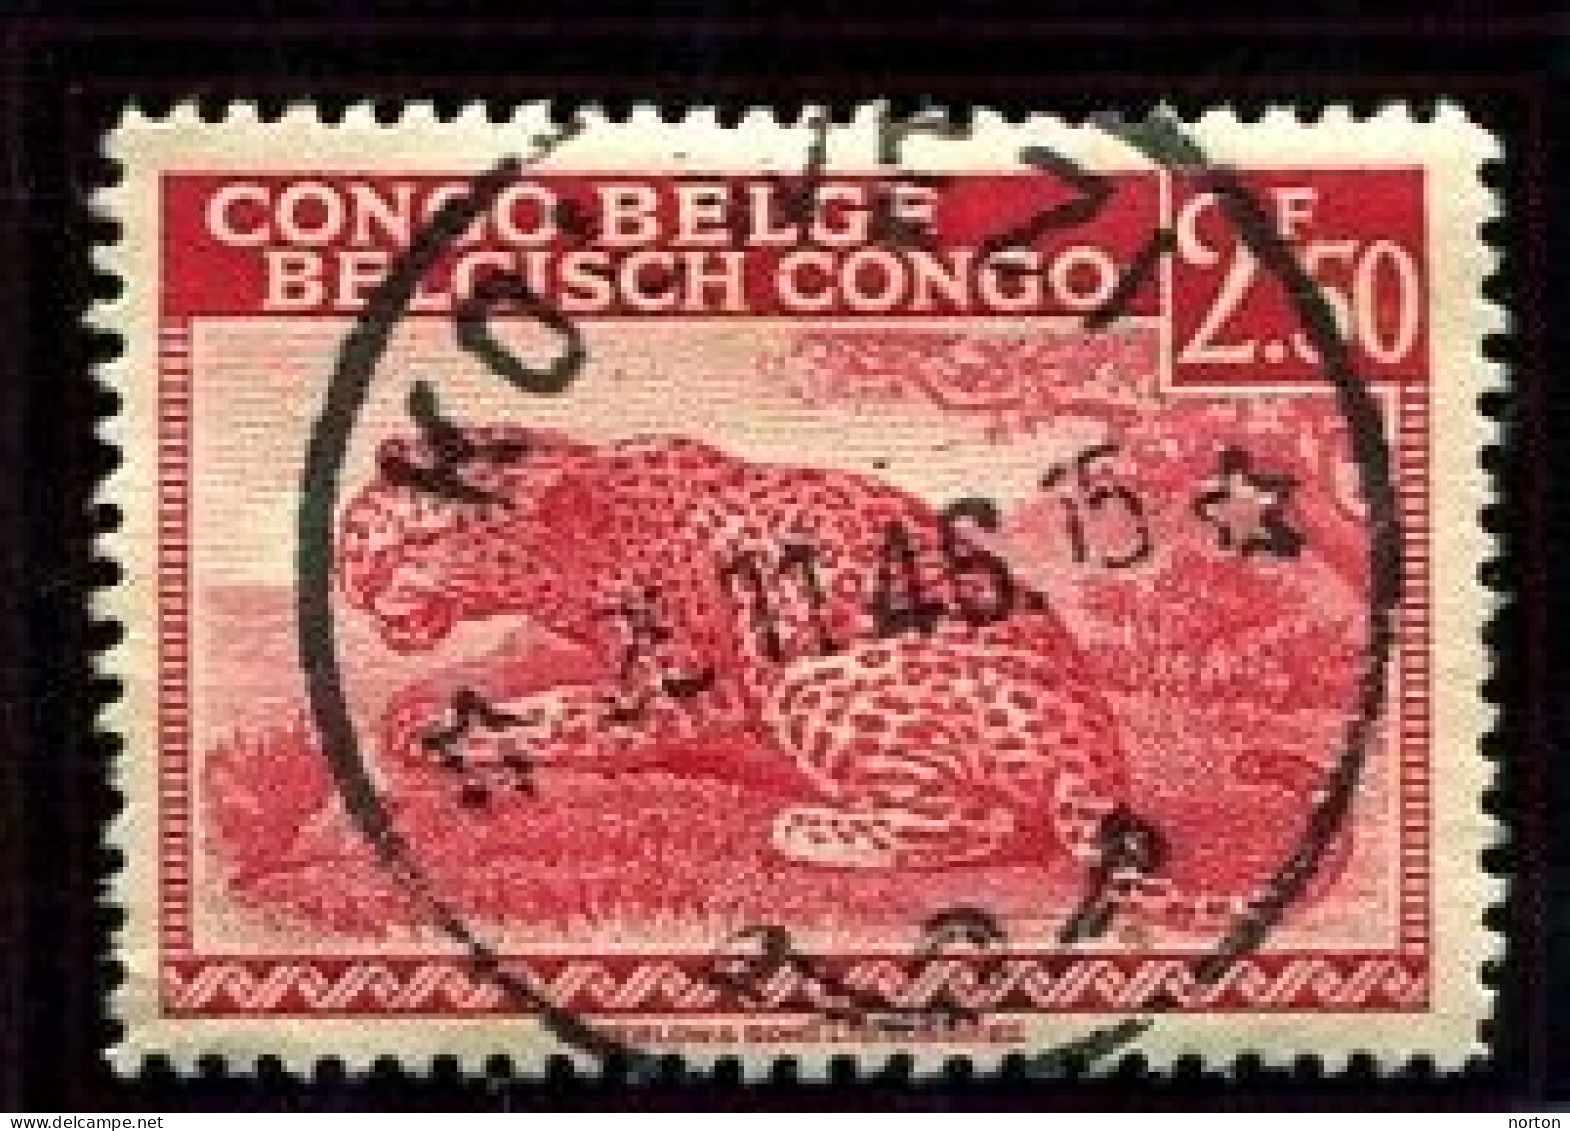 Congo Kolwezi Oblit. Keach 8A1 Sur C.O.B. 261 Le 25/11/1946 - Usati